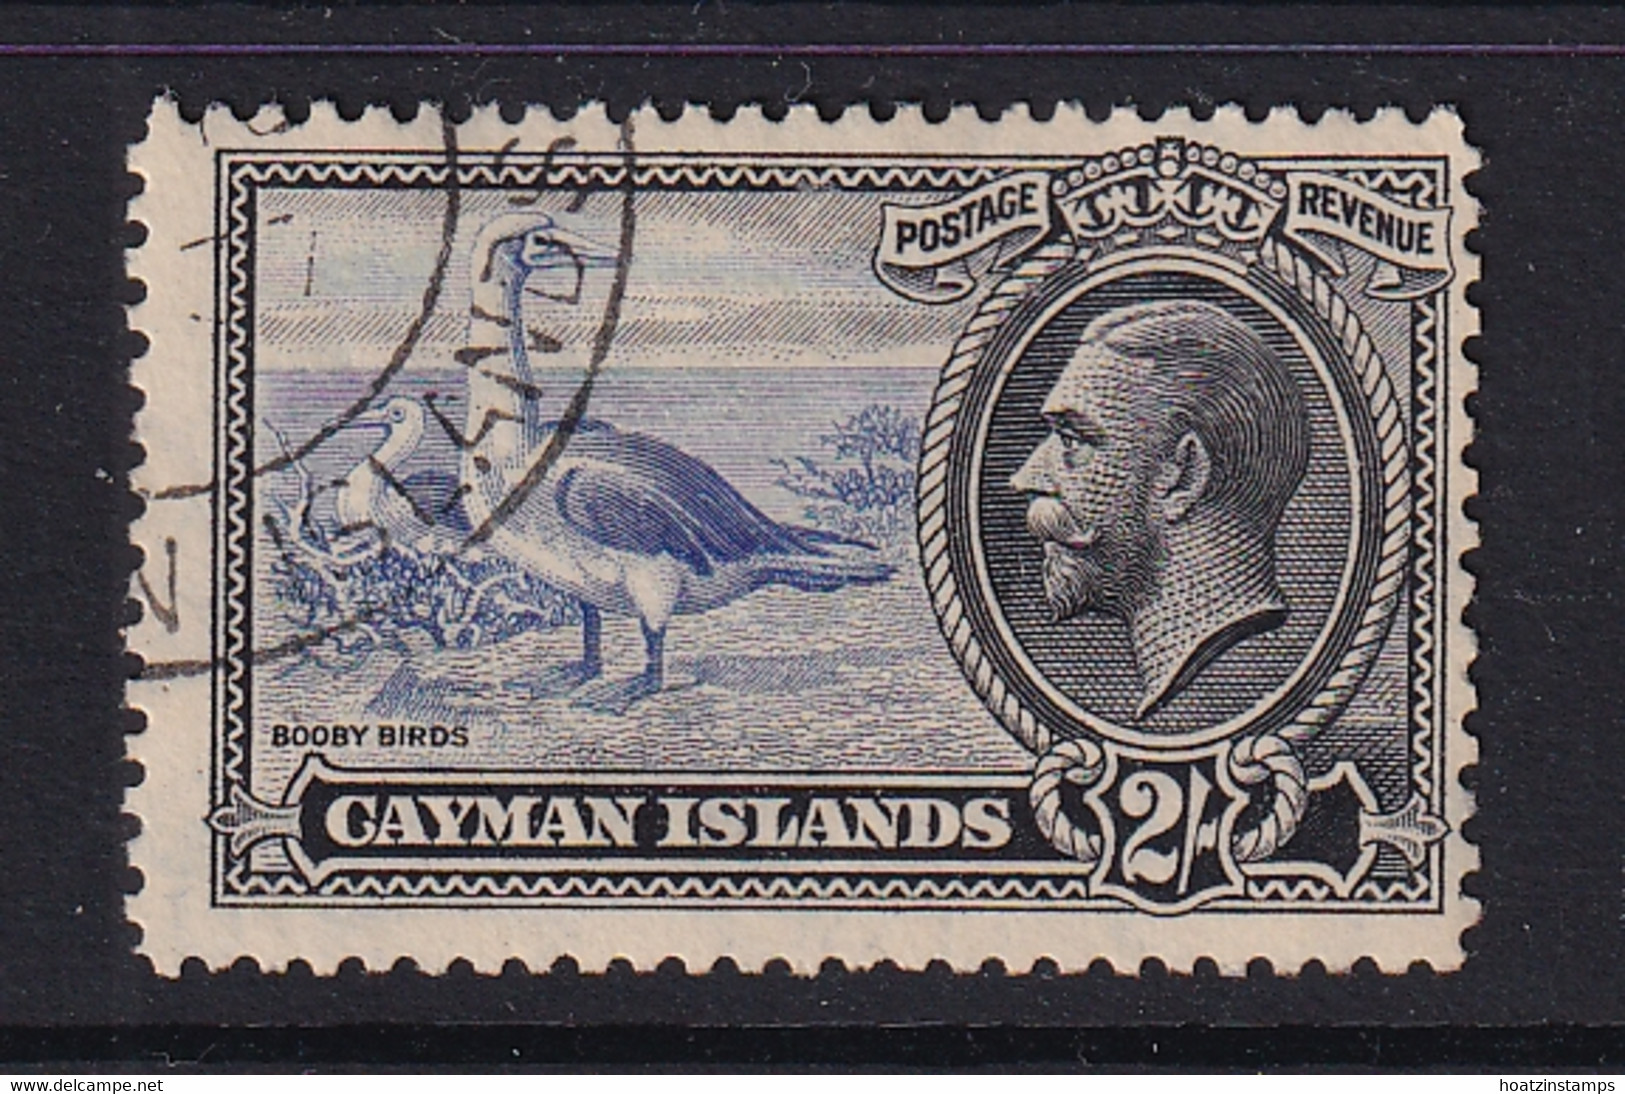 Cayman Islands: 1935   KGV - Pictorial   SG105   2/-     Used - Iles Caïmans